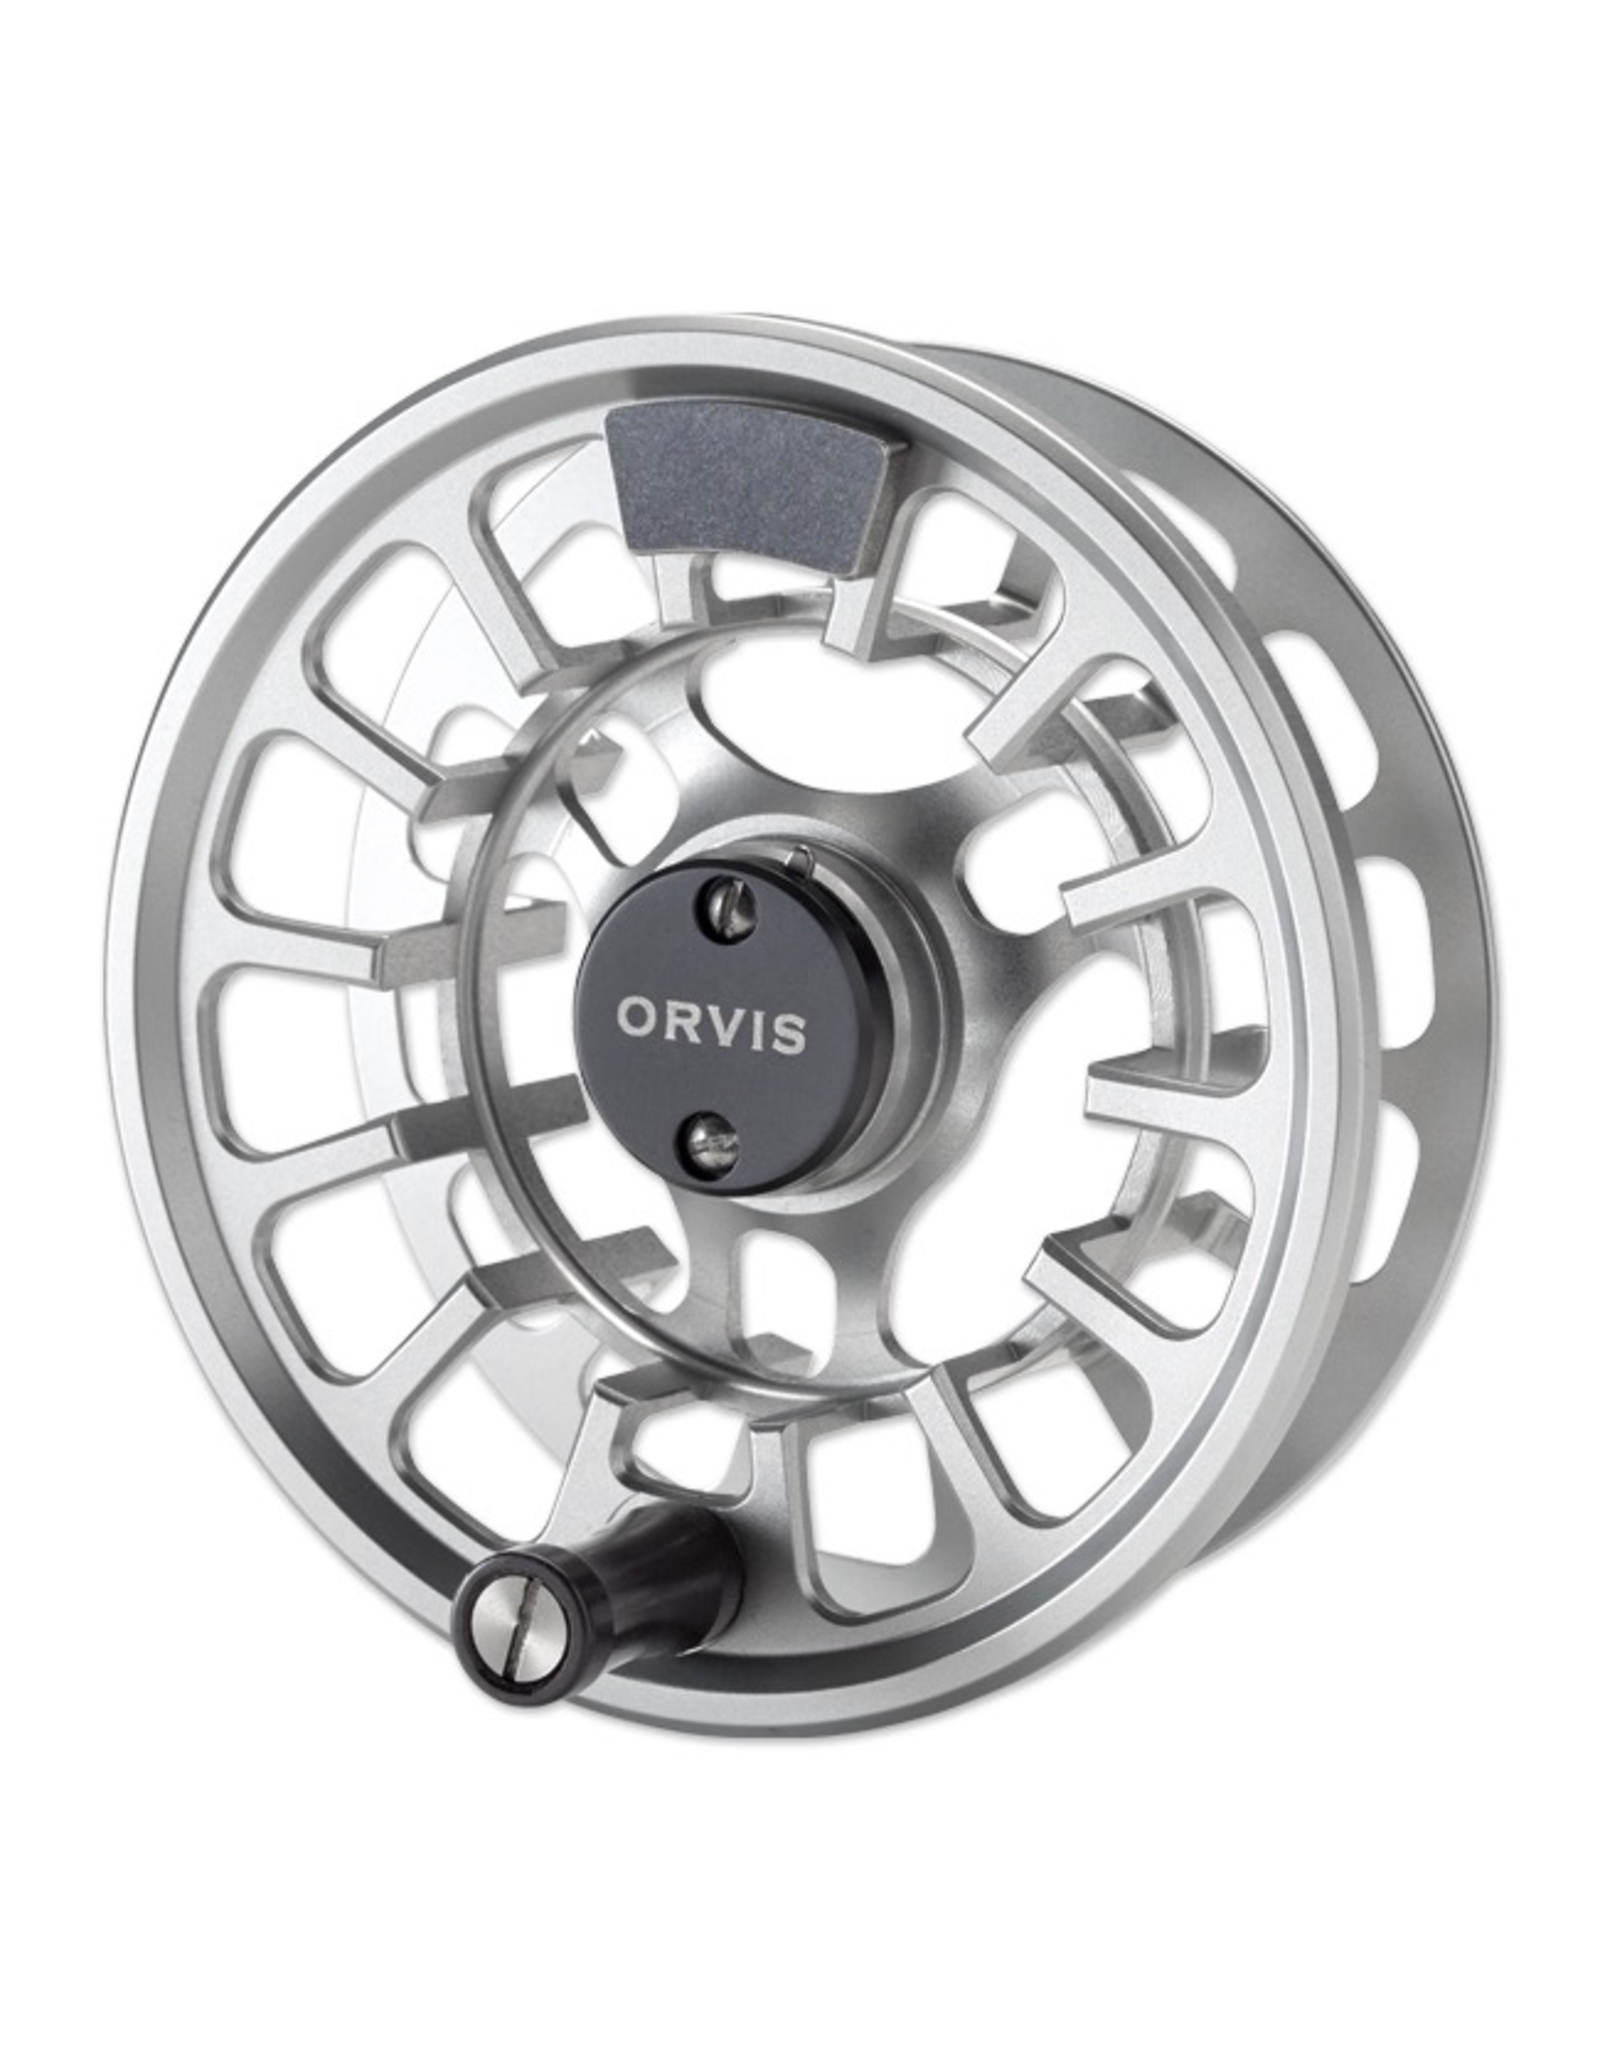 Orvis NEW ORVIS Hydros III Reel (Silver) 5-7wt